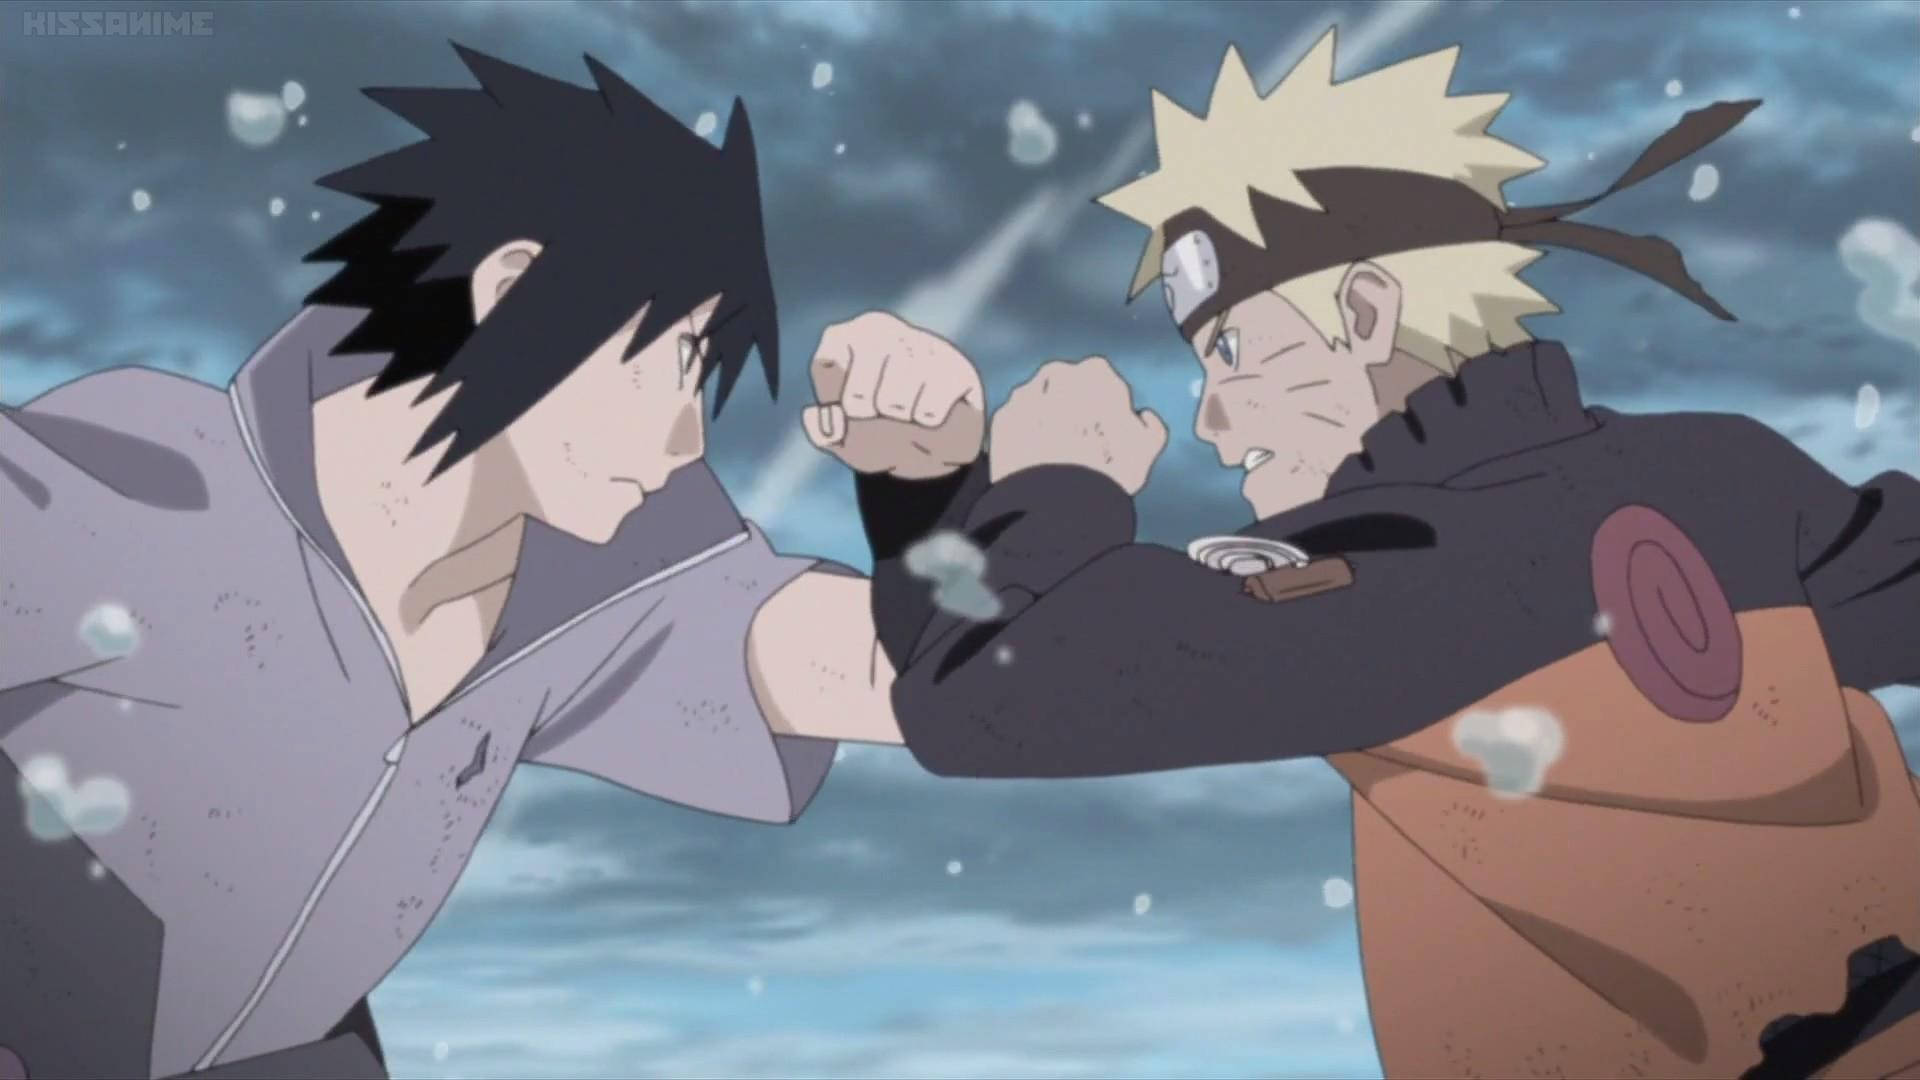 Aesthetic Sasuke Fight With Naruto Wallpaper